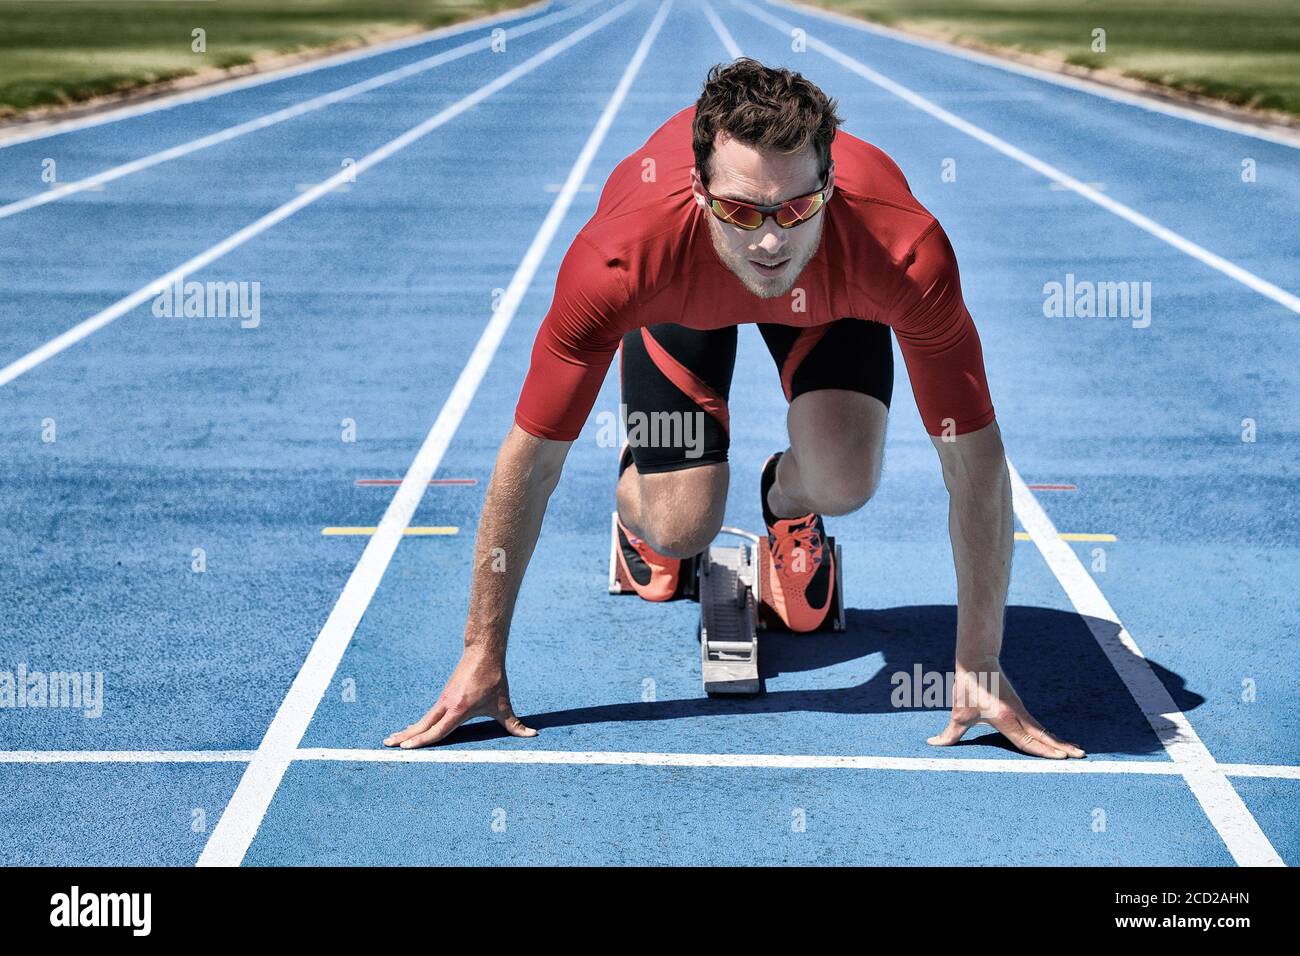 go! Running sport concept athlete ready 